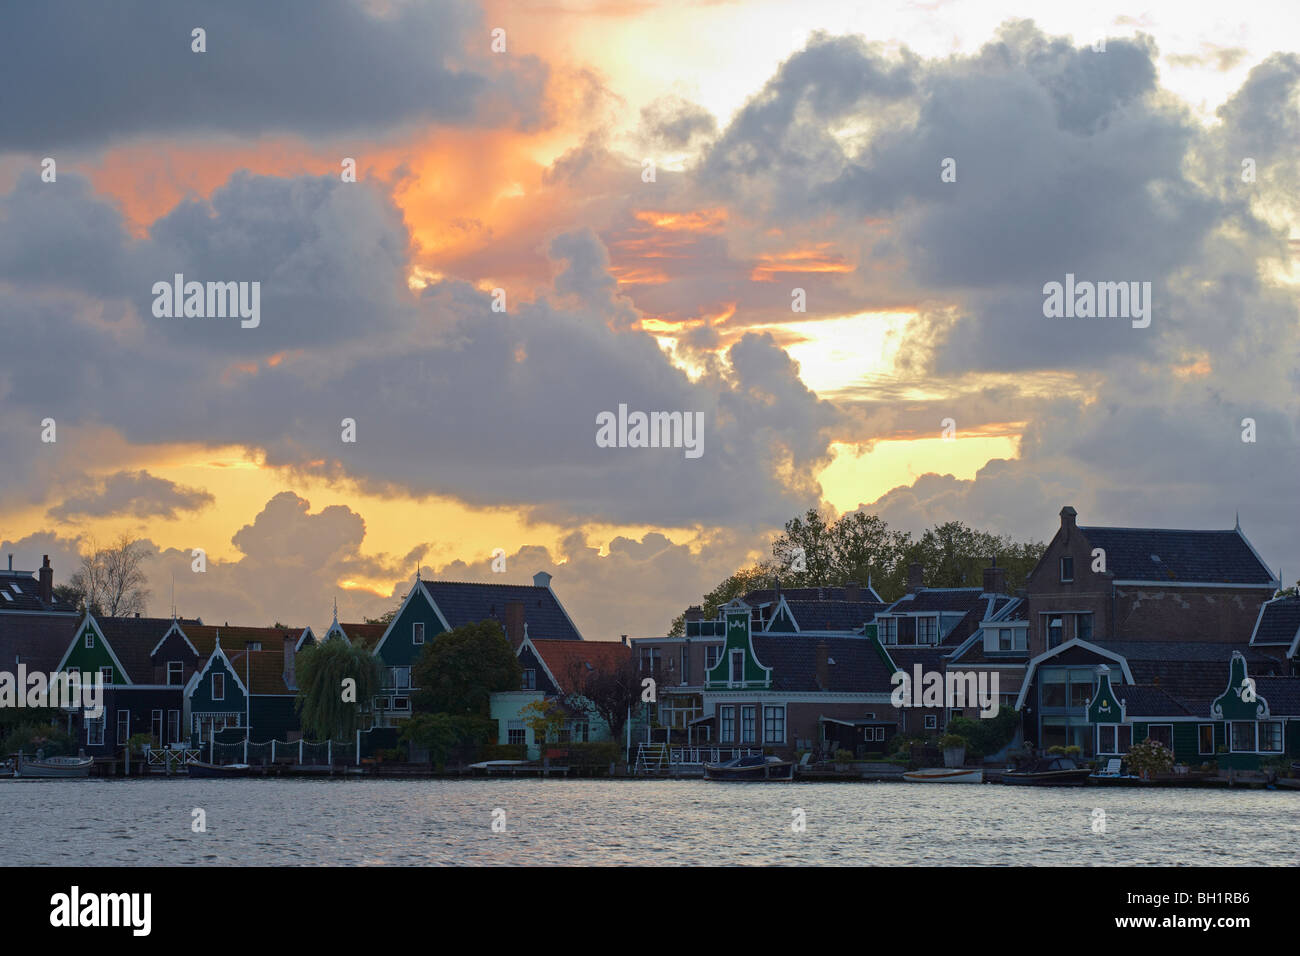 Historische Häuser am Fluss Zaan unter bewölktem Himmel bei Sonnenuntergang, Zaandijk, Niederlande, Europa Stockfoto